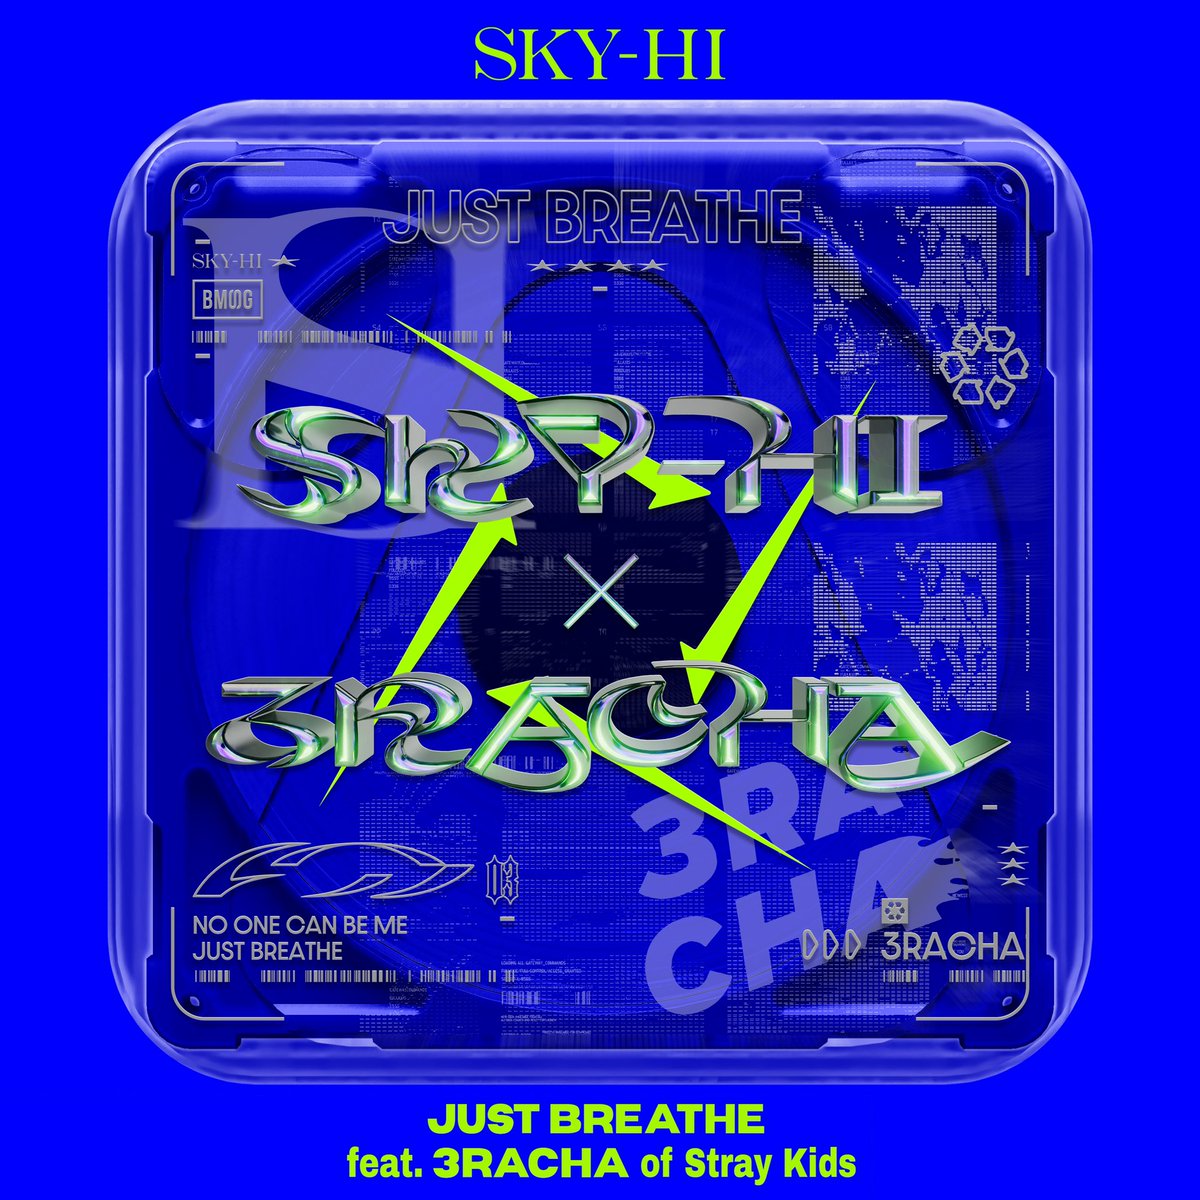 SKY-HI Digital Single『JUST BREATHE feat. 3RACHA of Stray Kids』の配信がスタート！

各配信サイトはこちら
sky-hi.lnk.to/JUSTBREATHE

#StrayKids
#3RACHA
#JUSTBREATHE
#SKYHI
@SkyHidaka
@SKYHI_STAFF